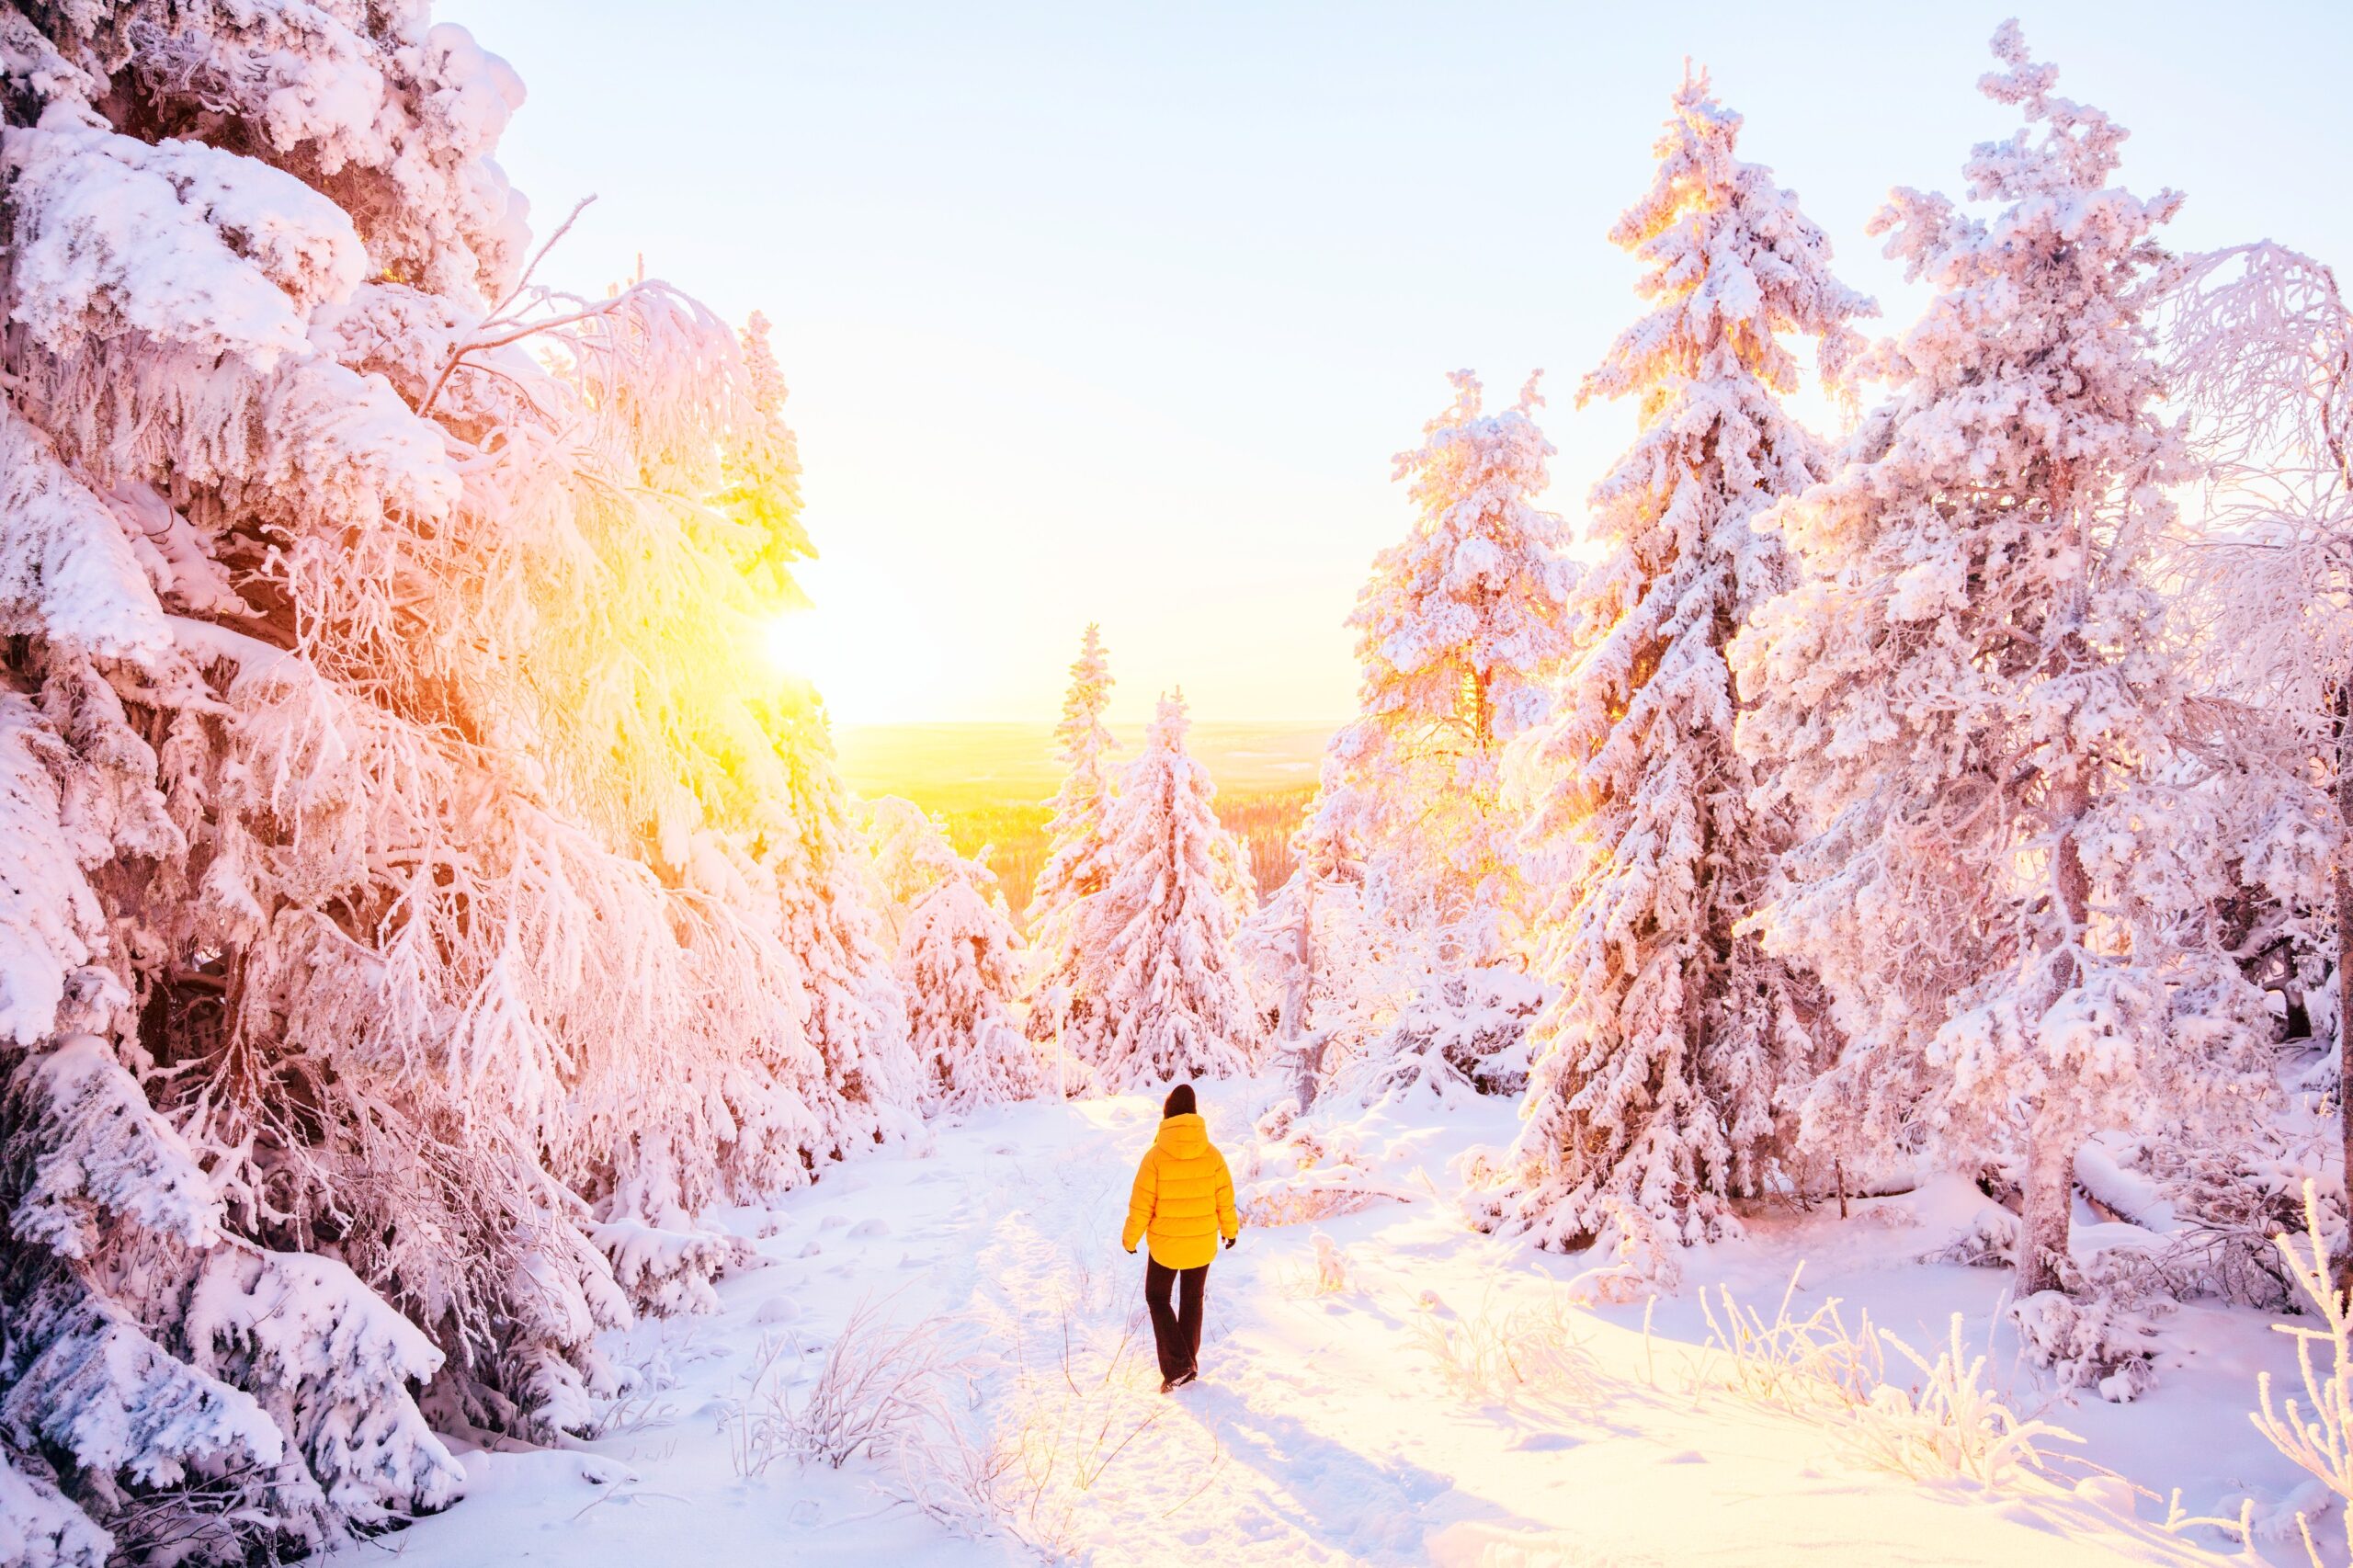 <img src="finland.jpg" alt="finland forest holistic benefits of hiking"/>